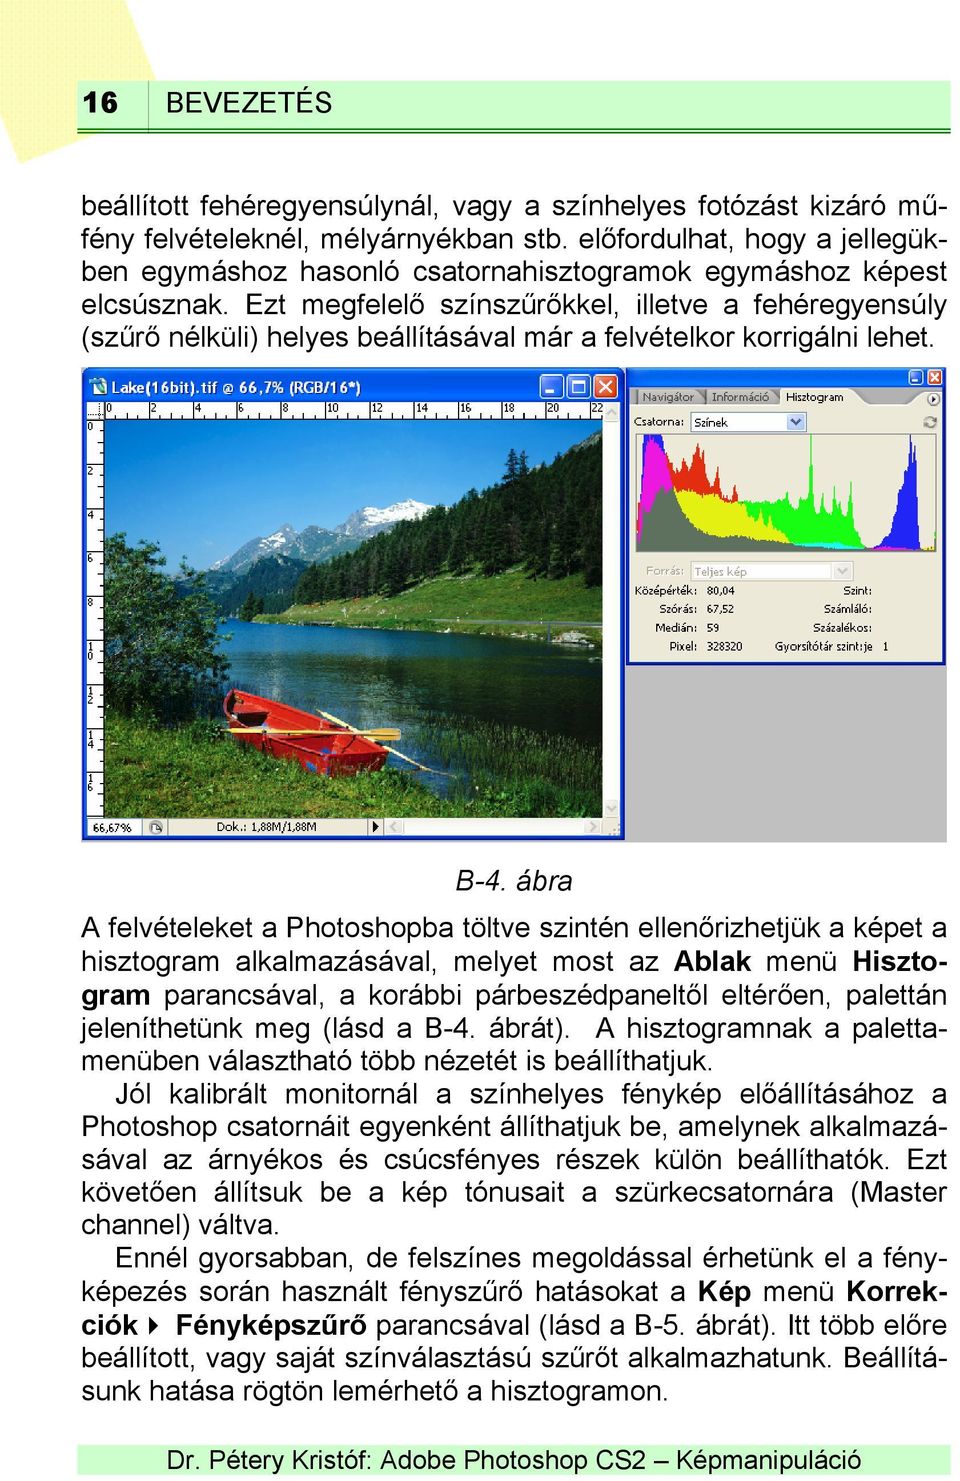 Dr. Pétery Kristóf: Adobe Photoshop CS2 Képmanipuláció - PDF Free Download